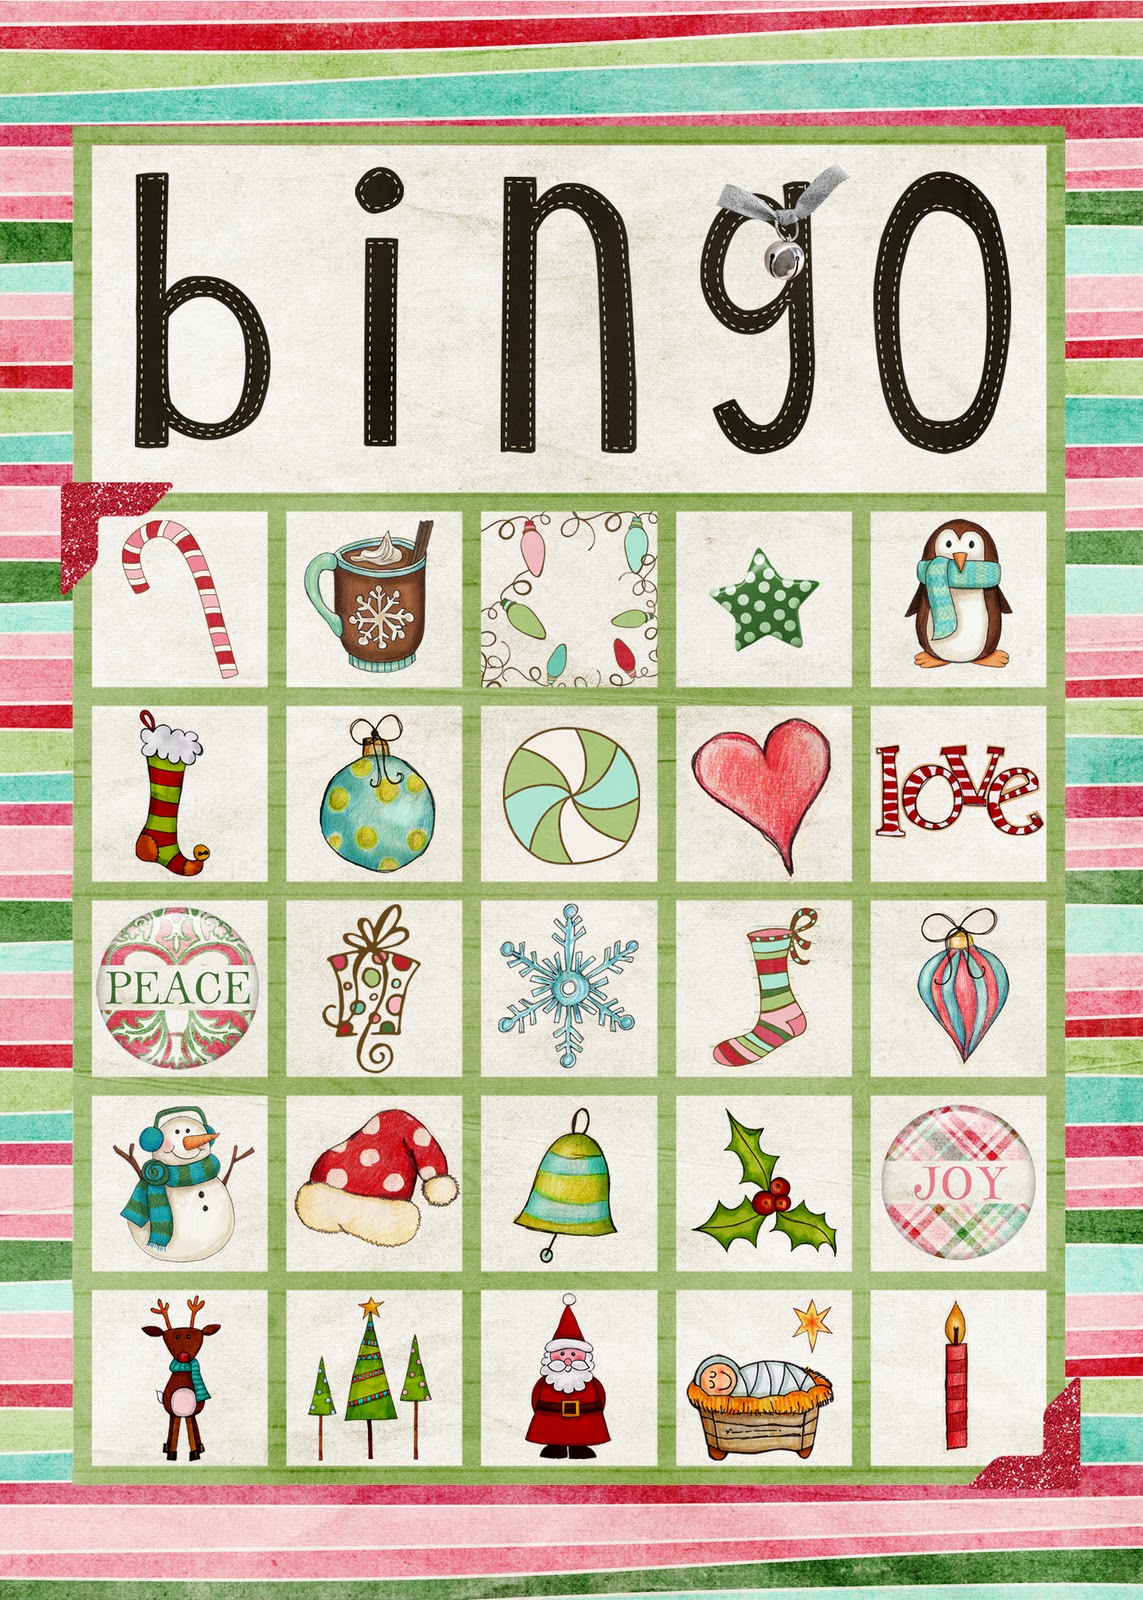 7-best-free-printable-christmas-bingo-sheets-pdf-for-free-at-printablee